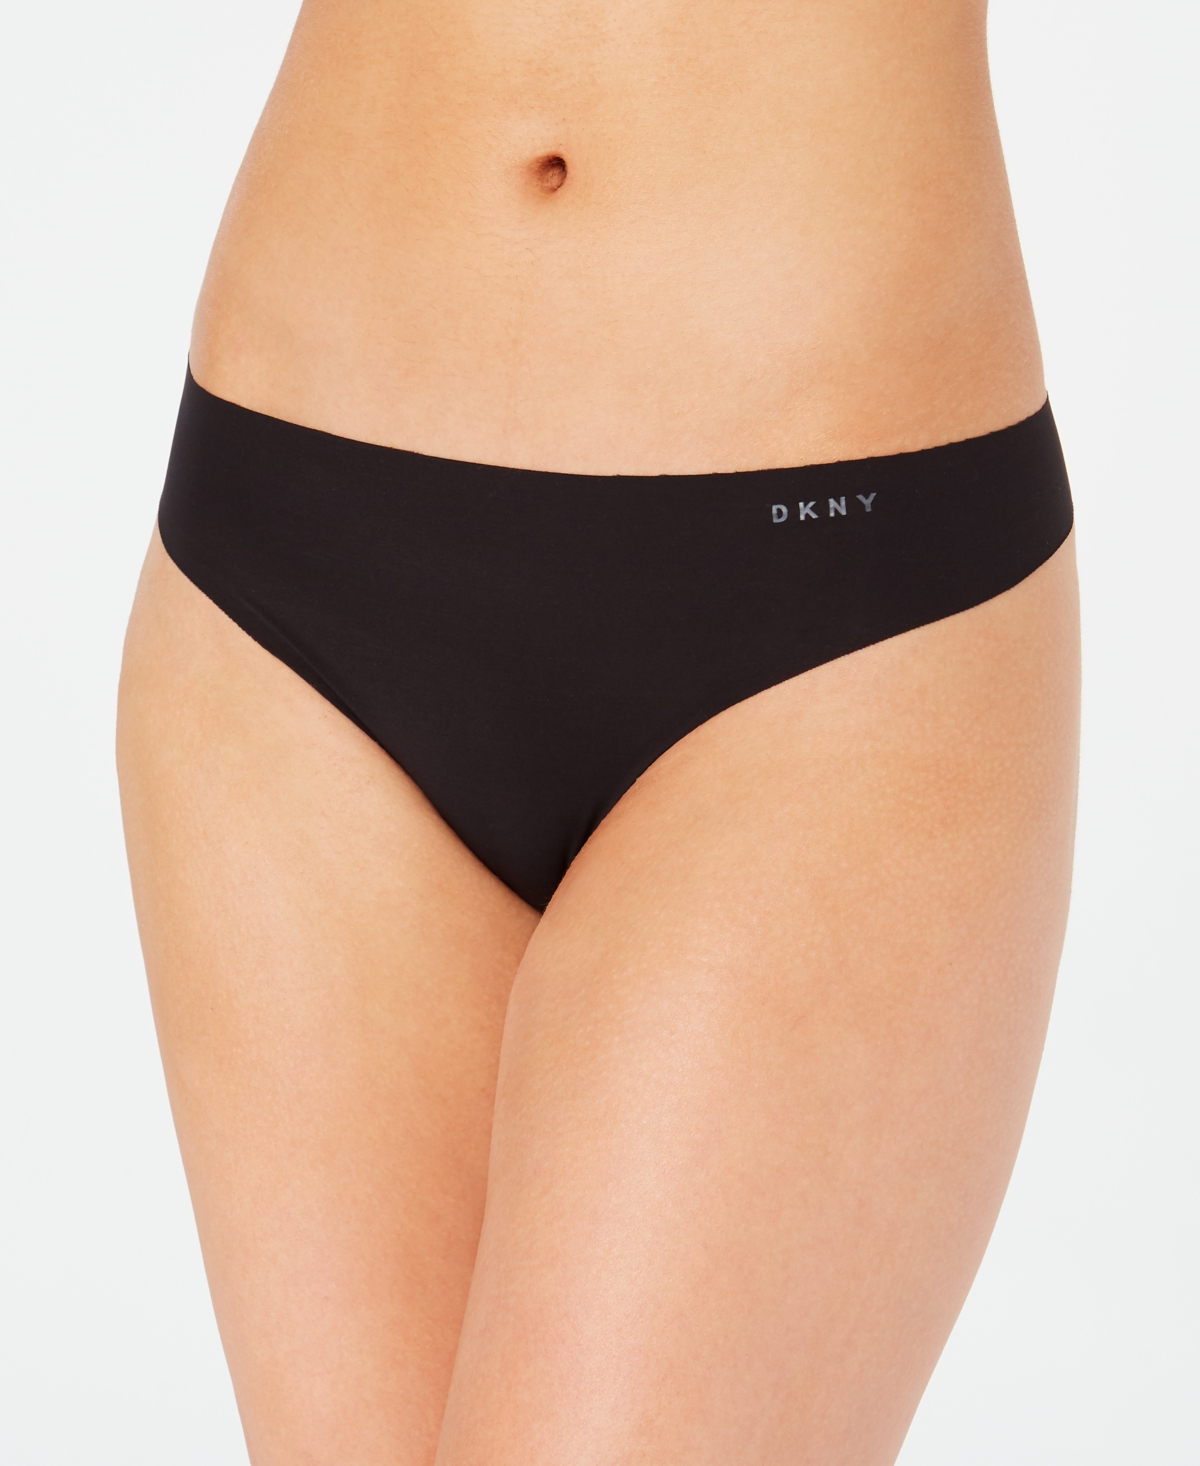  DKNY Women's Mesh Litewear Thong, Skinny Dip, Large